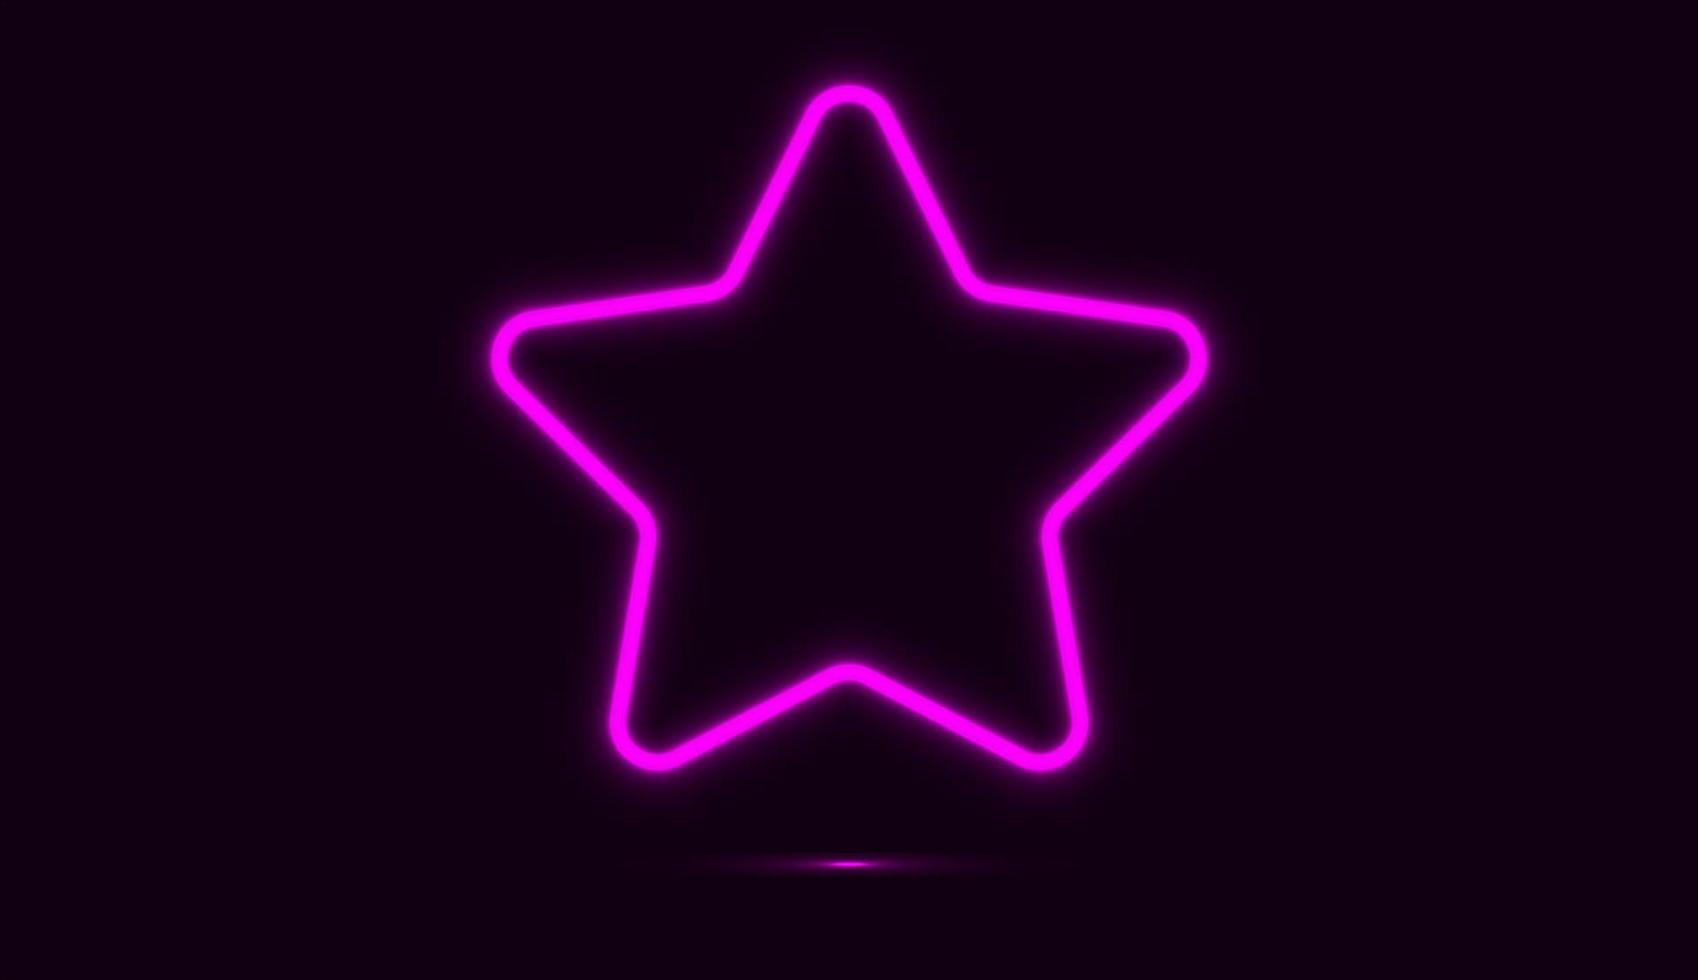 estrella con luz de neón púrpura aislada sobre fondo oscuro. ilustración vectorial para el fondo vector